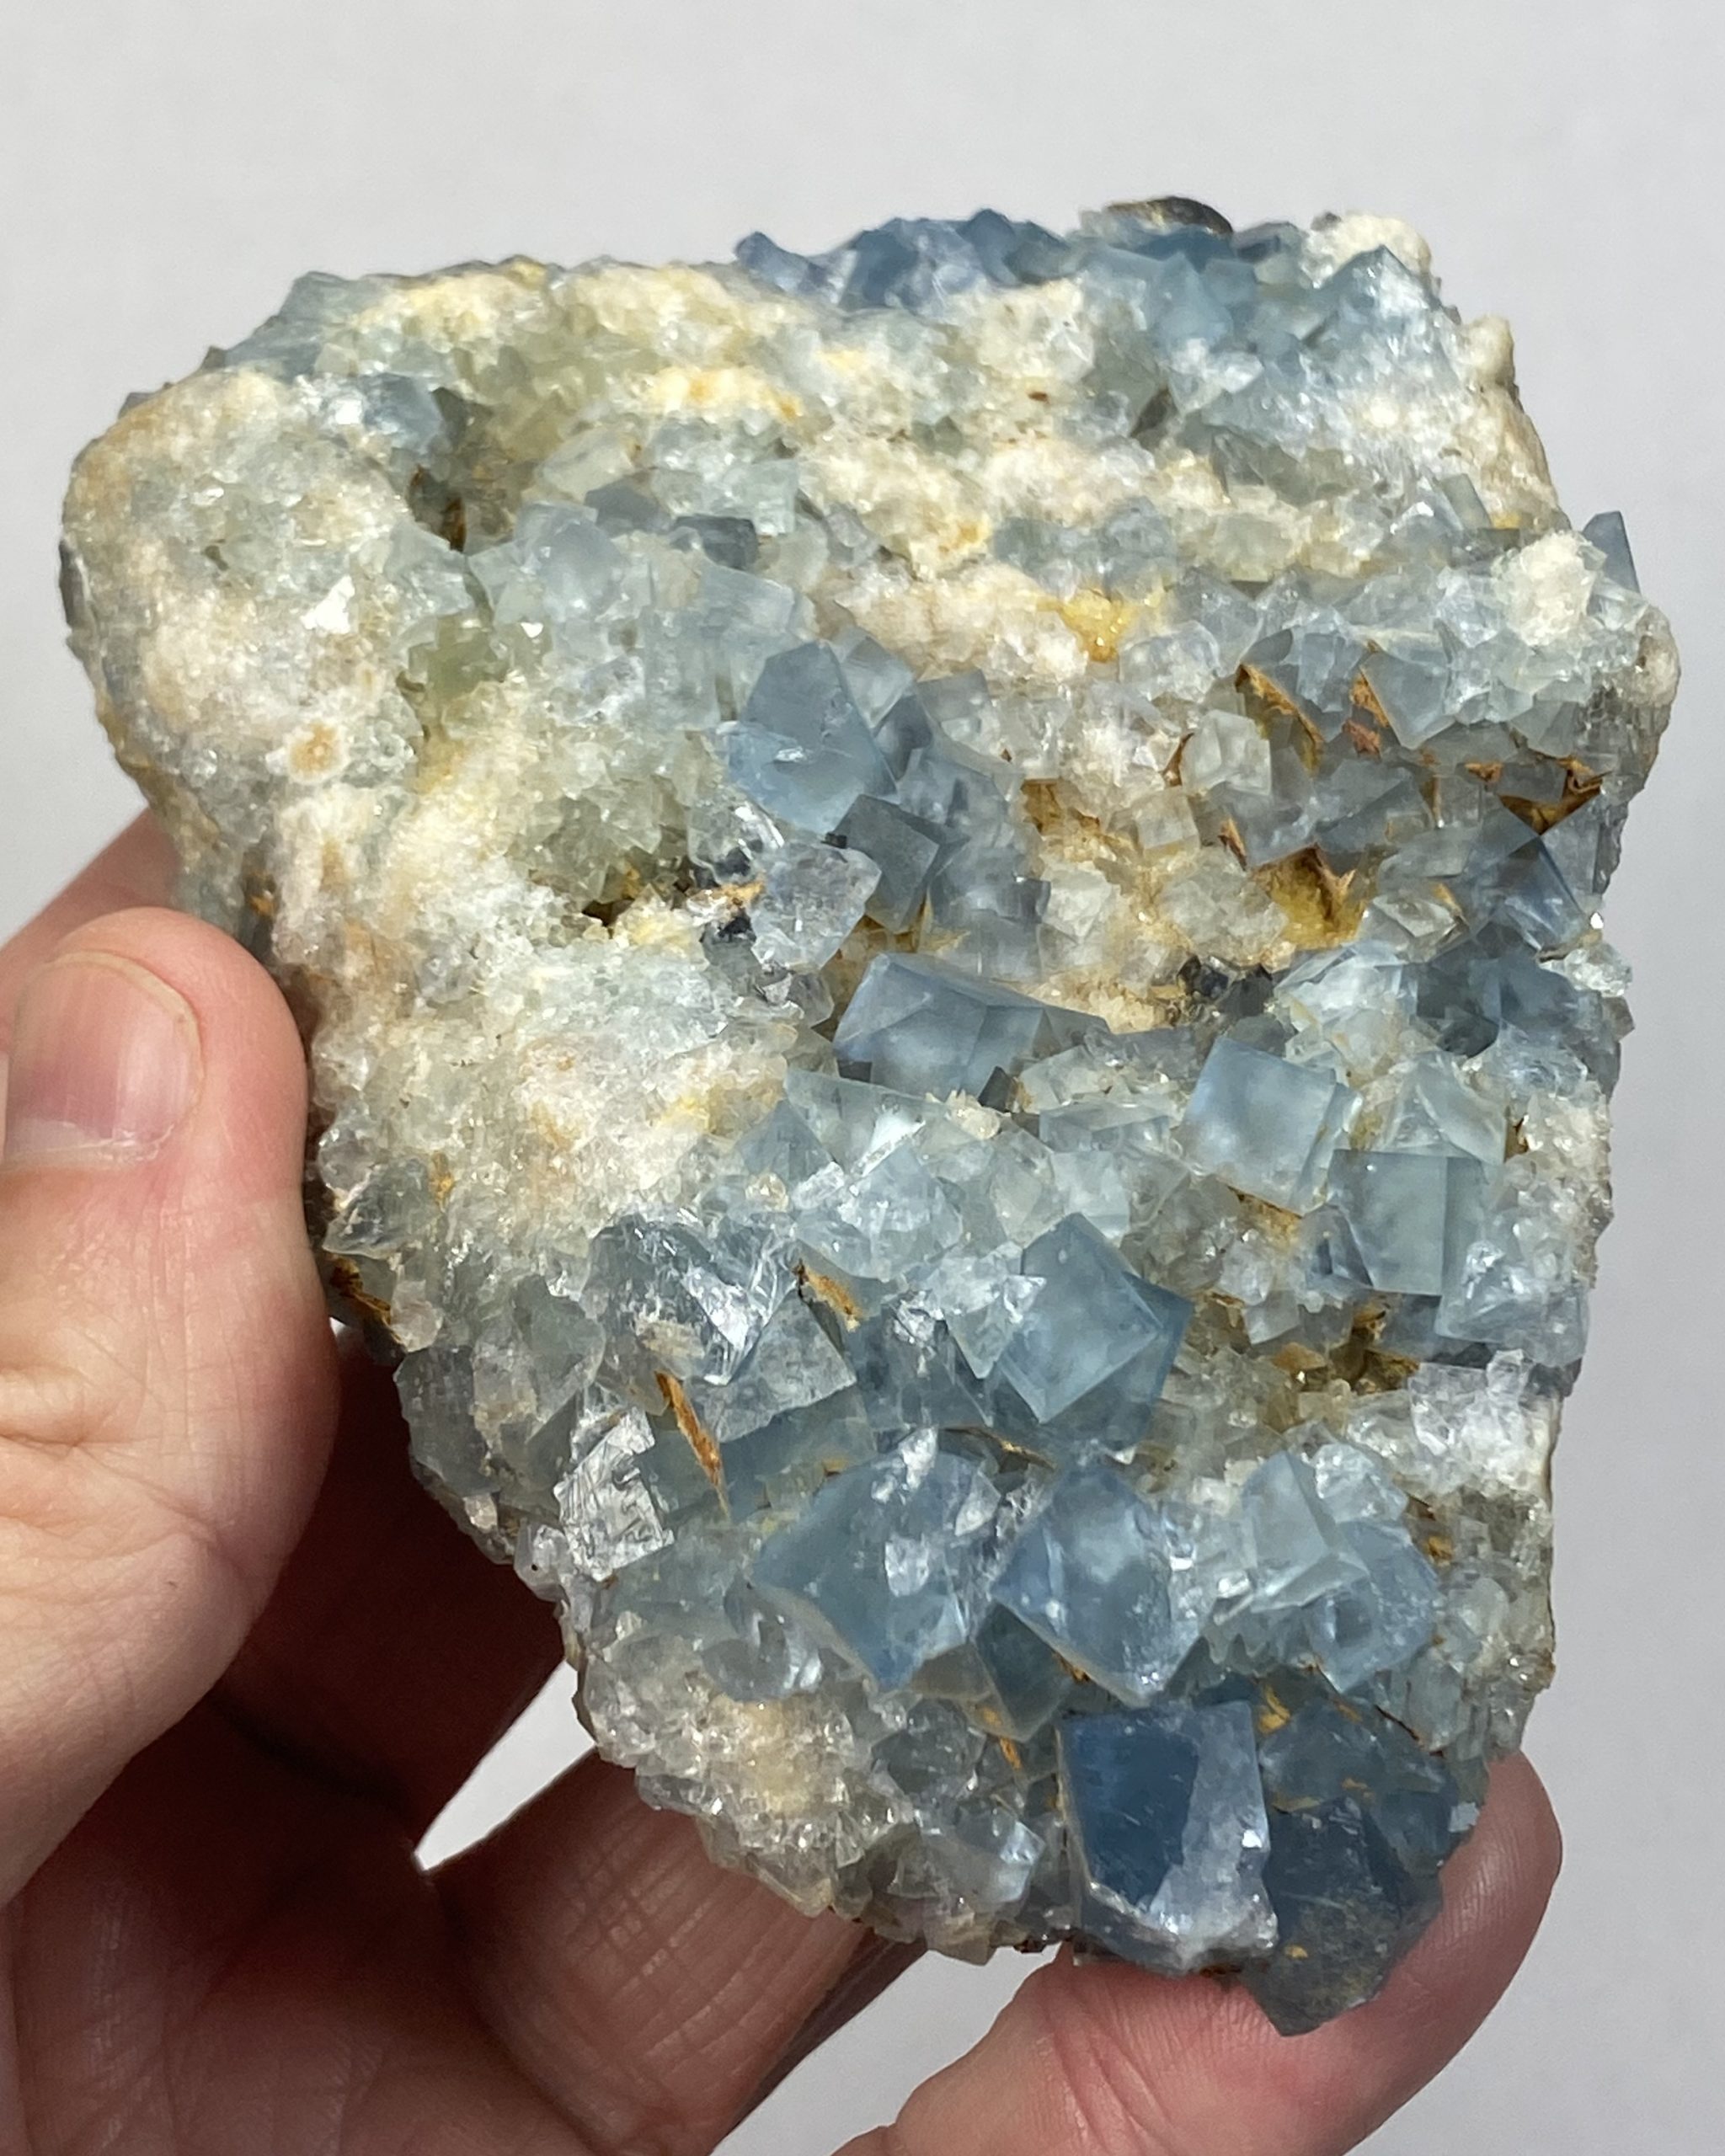 Delicate blue fluorite crystals on matrix